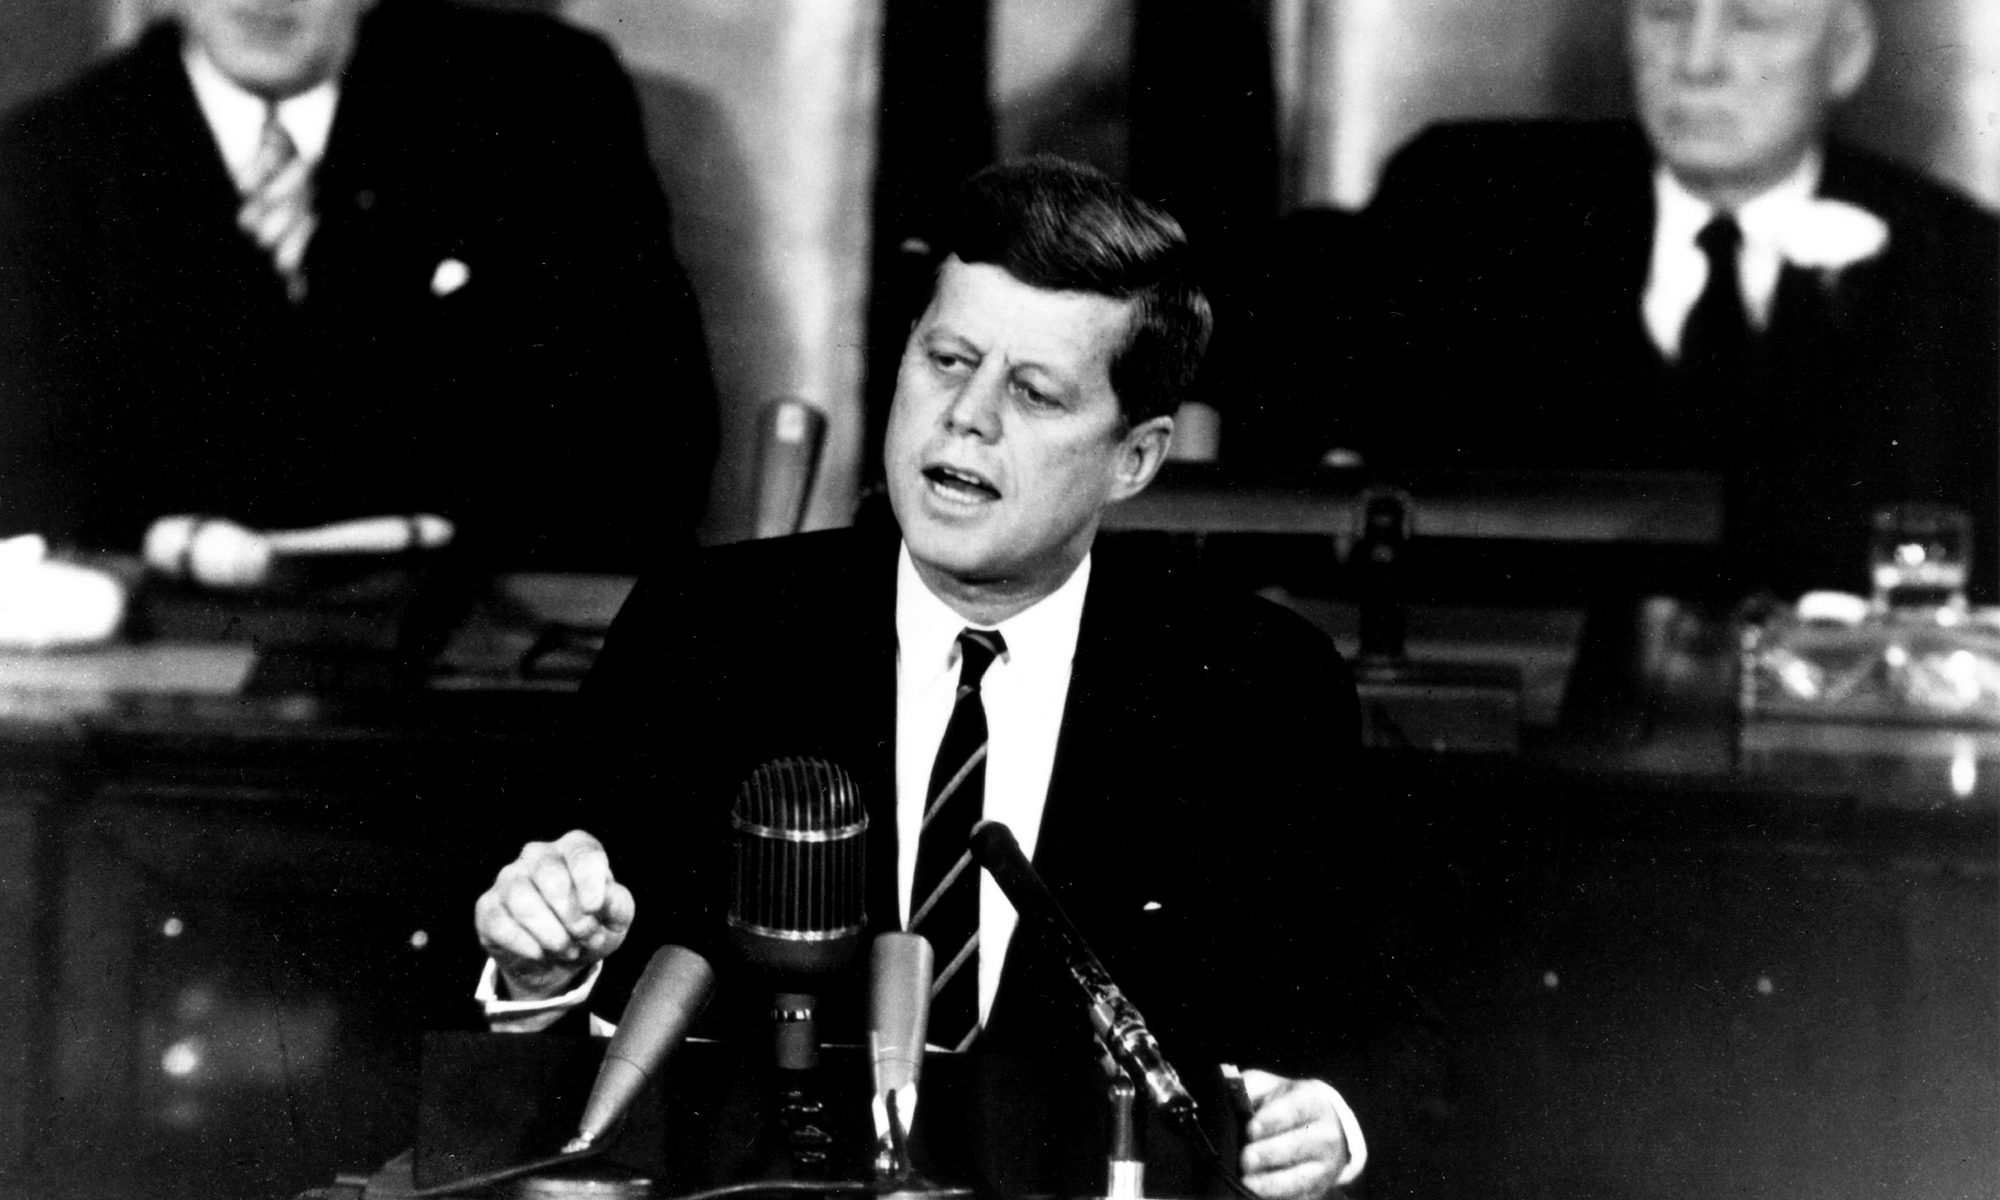 president John F Kennedy